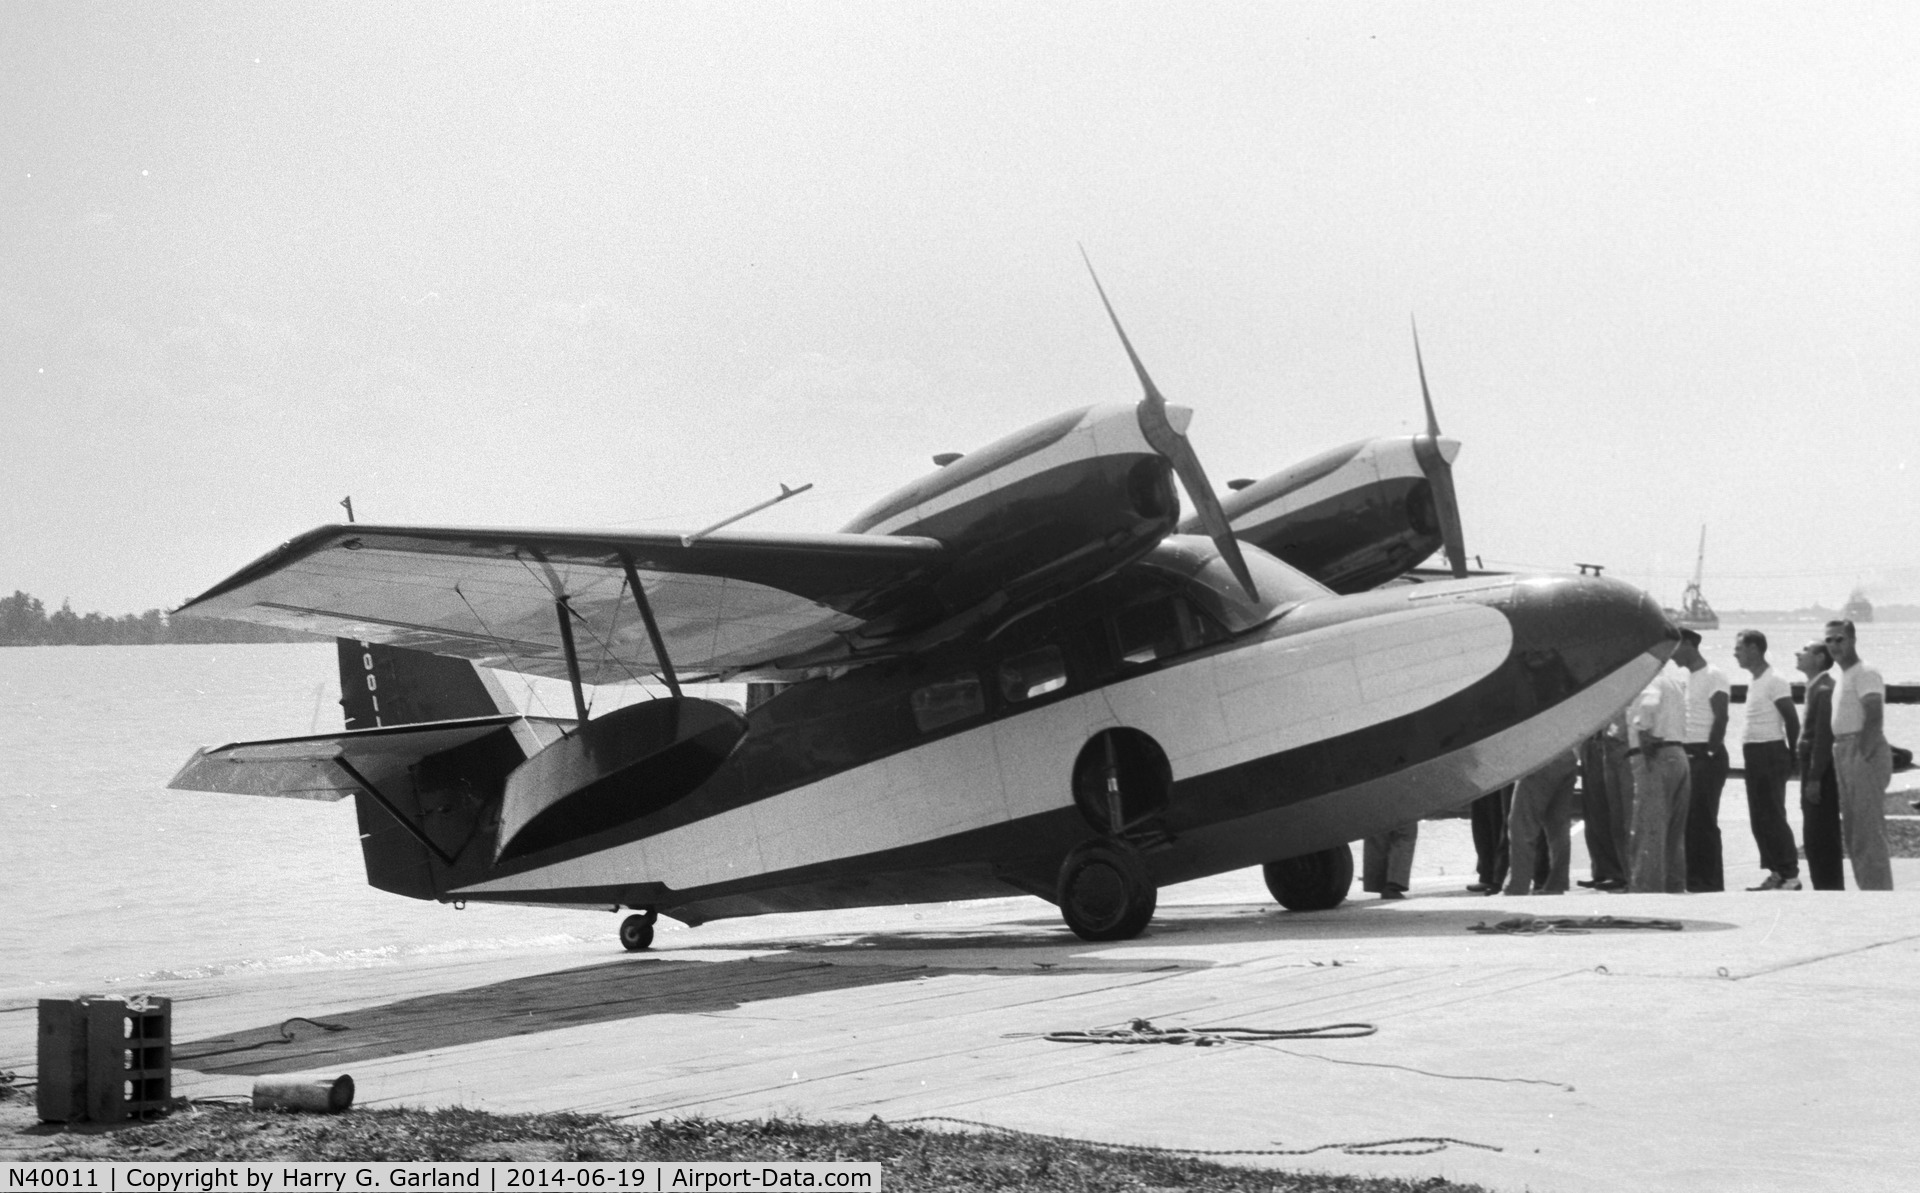 N40011, Grumman G-44 Widgeon C/N 1368, Grumman Widgeon NC40011 in 1947 at Garland's Seaplane Base on the Detroit River. Garland's Seaplane Base was owned by Harry G. Garland who took this picture.